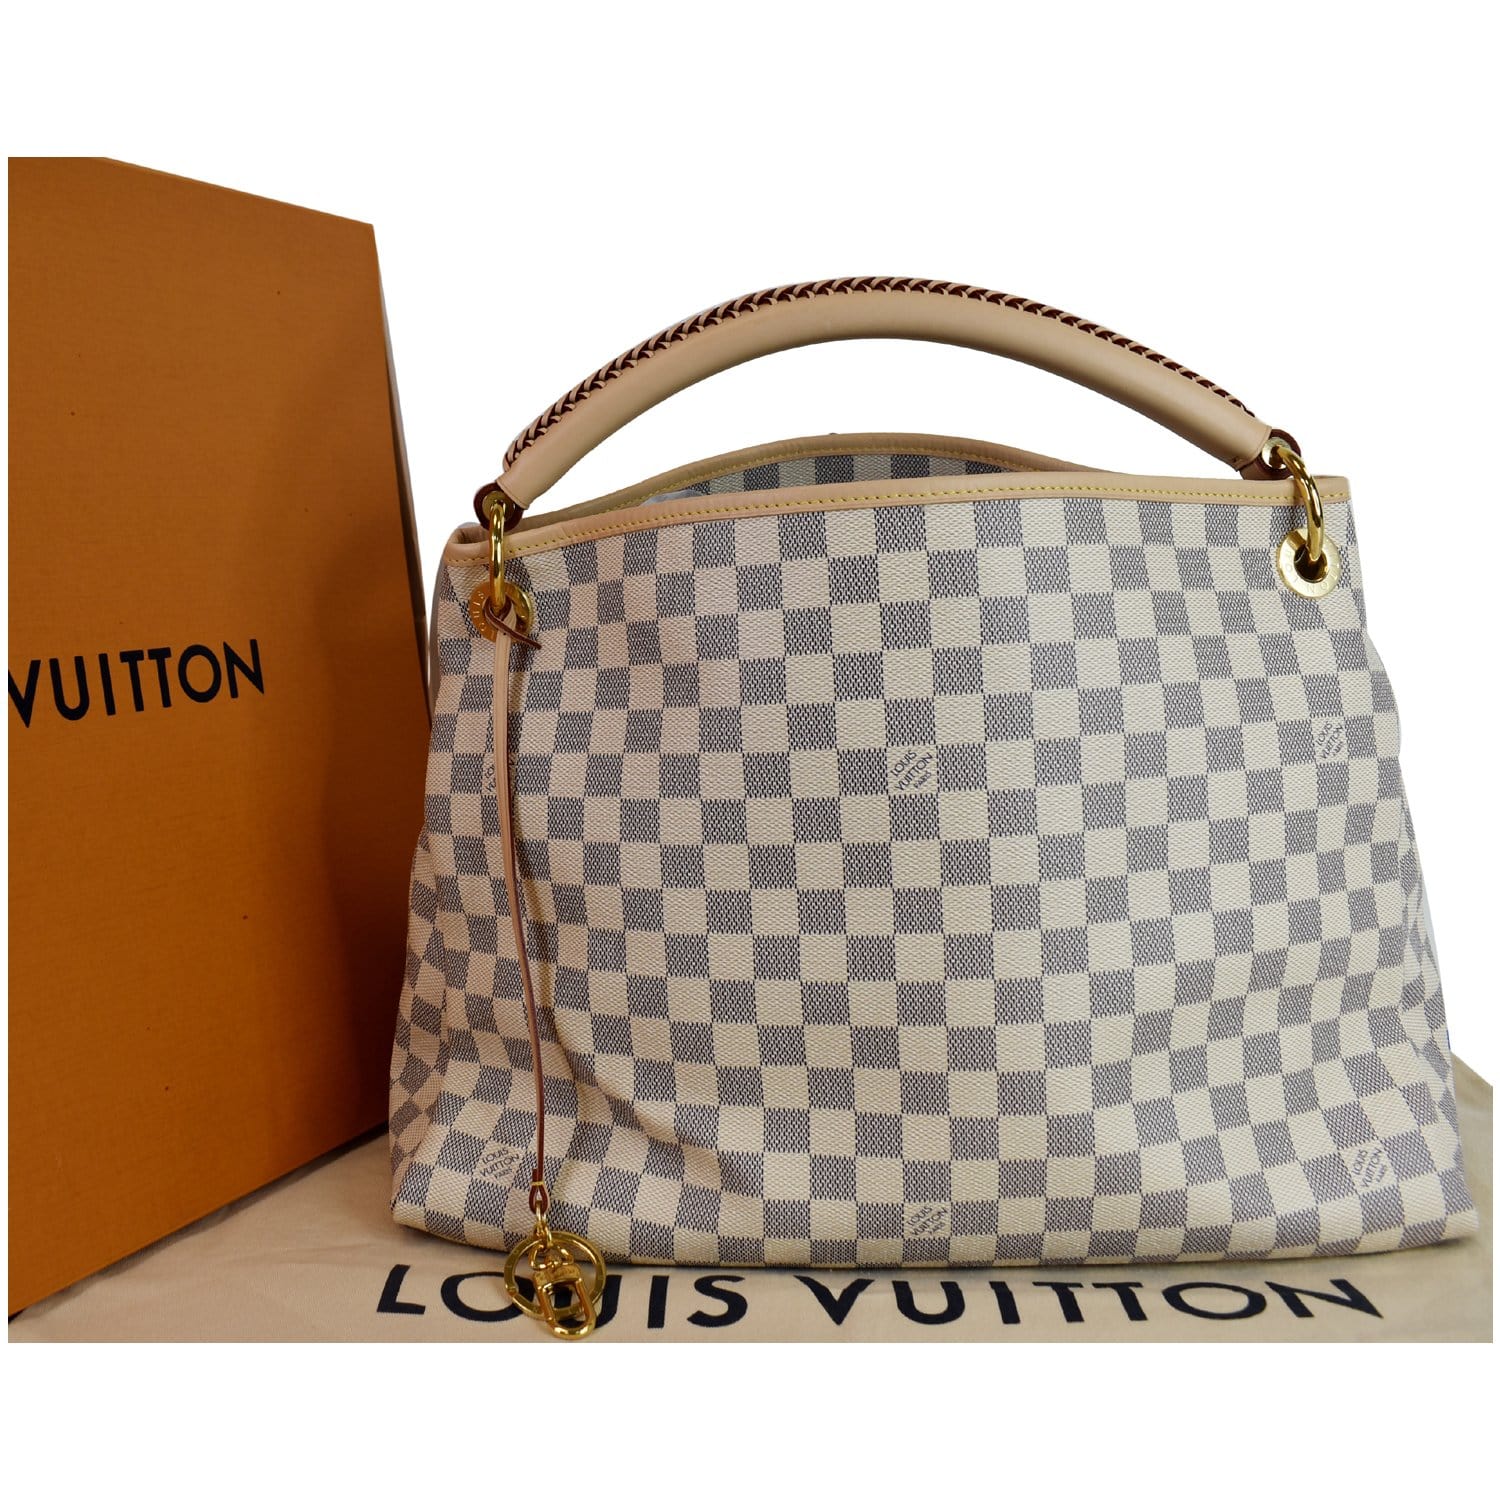 LOUIS VUITTON Damier Azur Artsy GM Shoulder Bag Limited